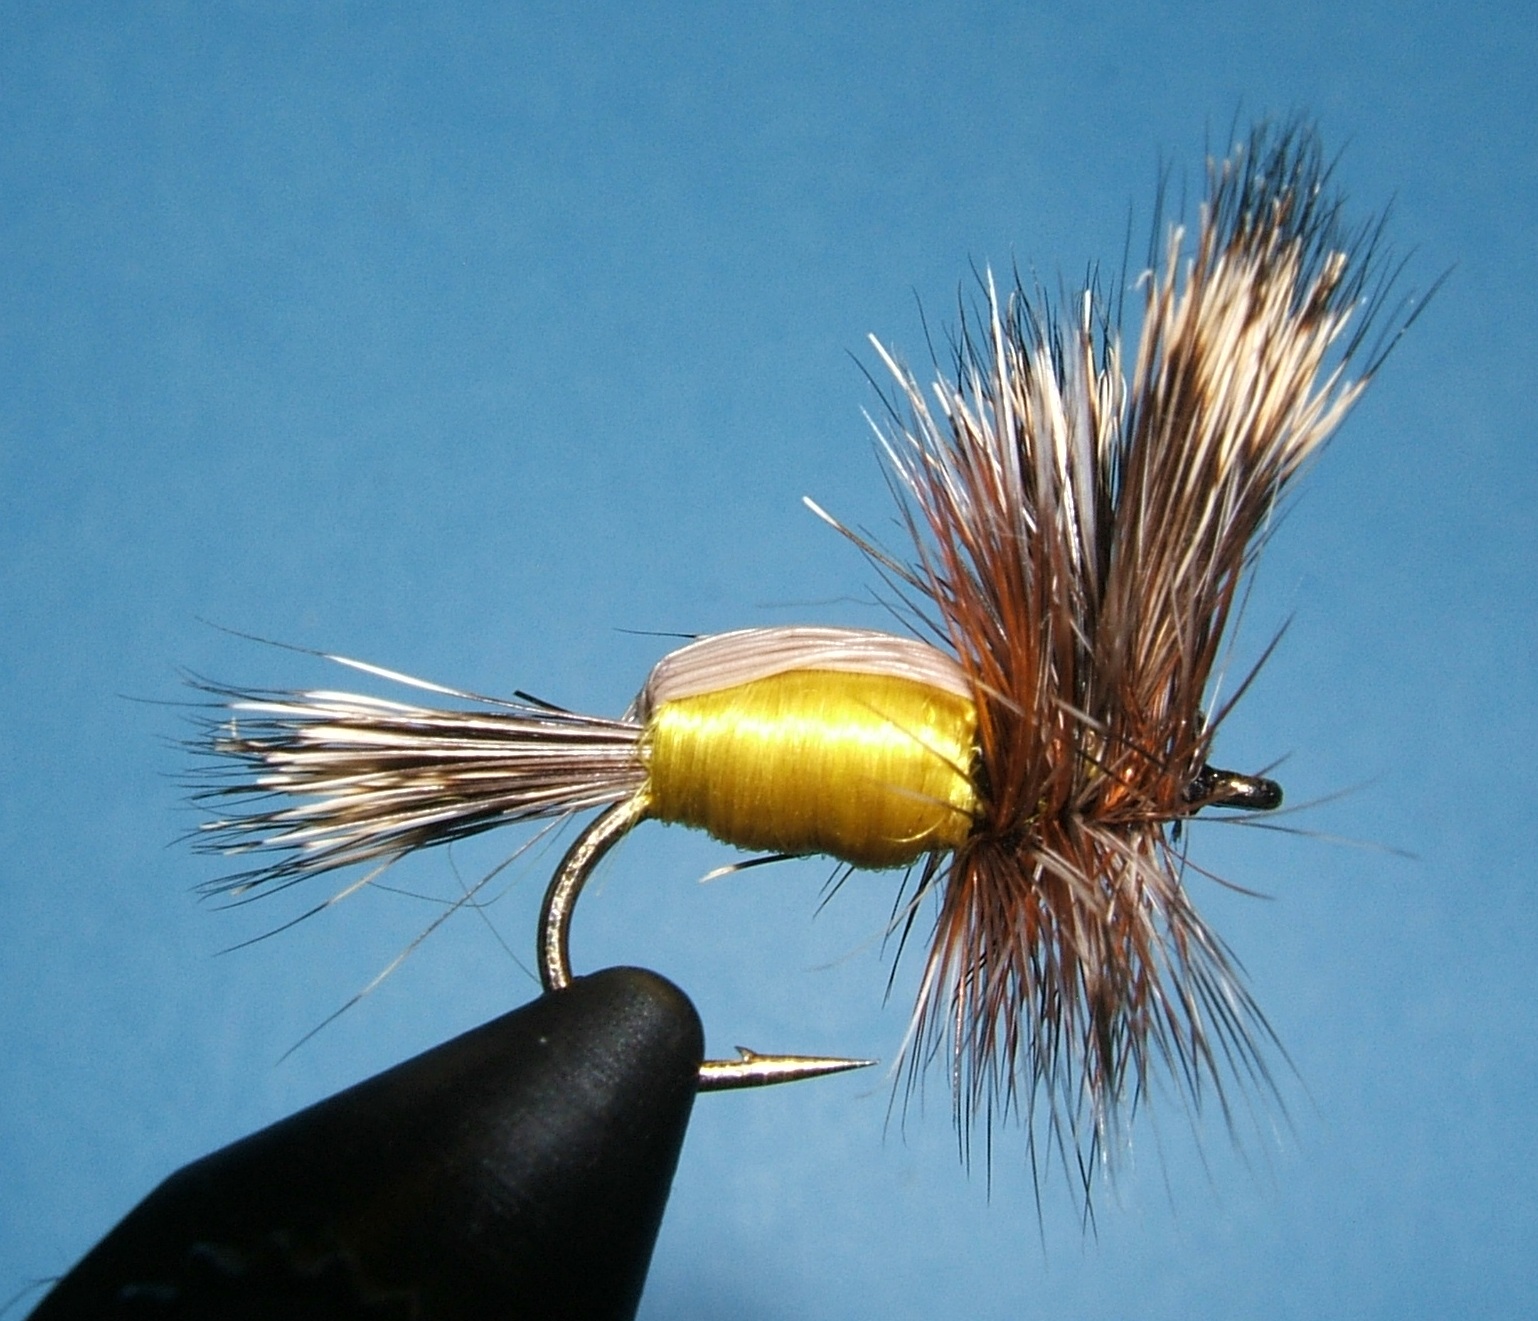 Humpy pack:18 dry flies: 3 colors, sizes, 10, 12, 14. – Kootenay